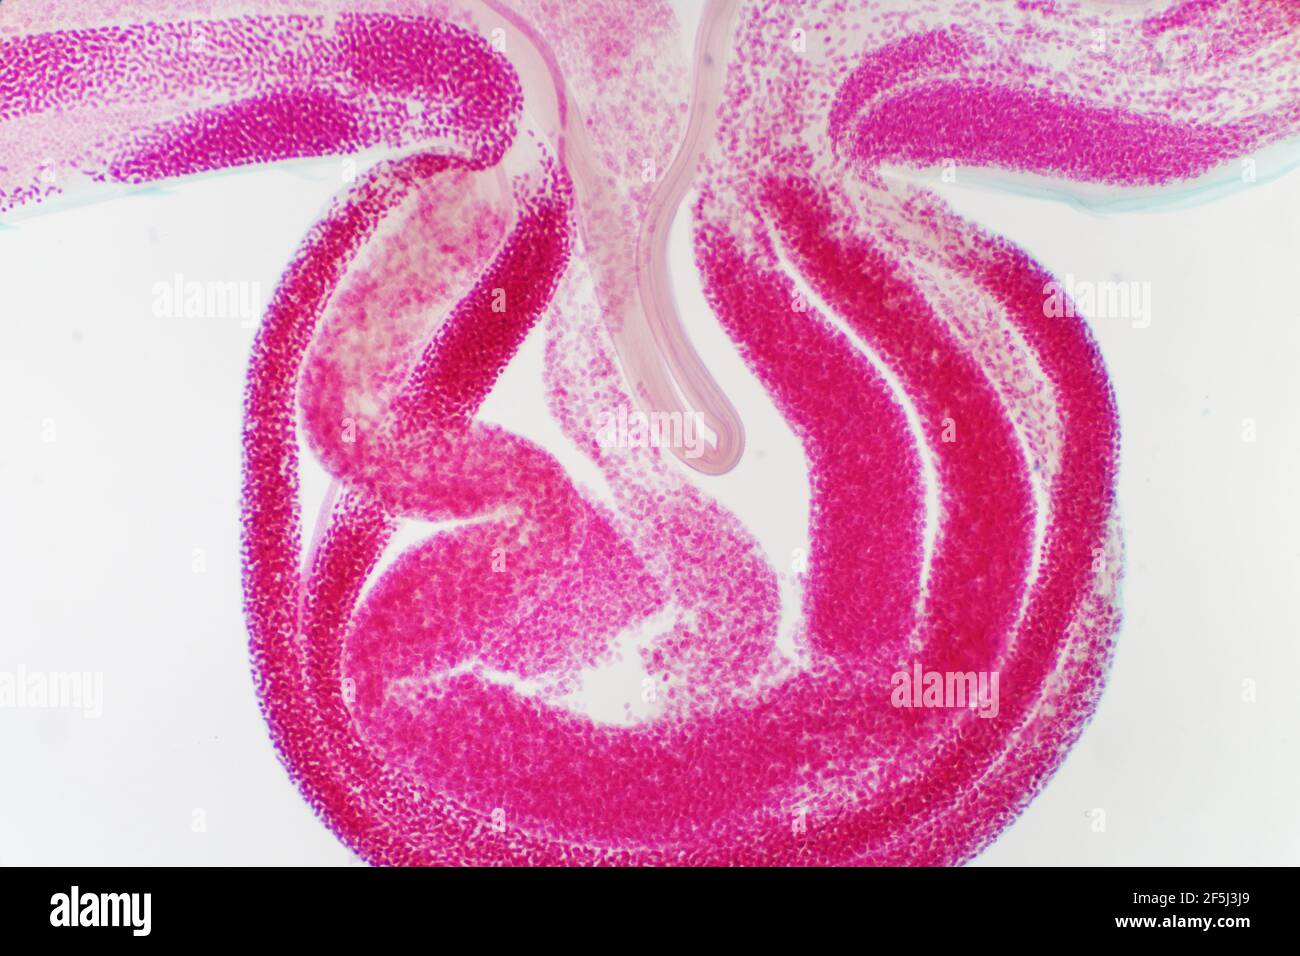 Dog roundworm eggs, light micrograph Stock Photo